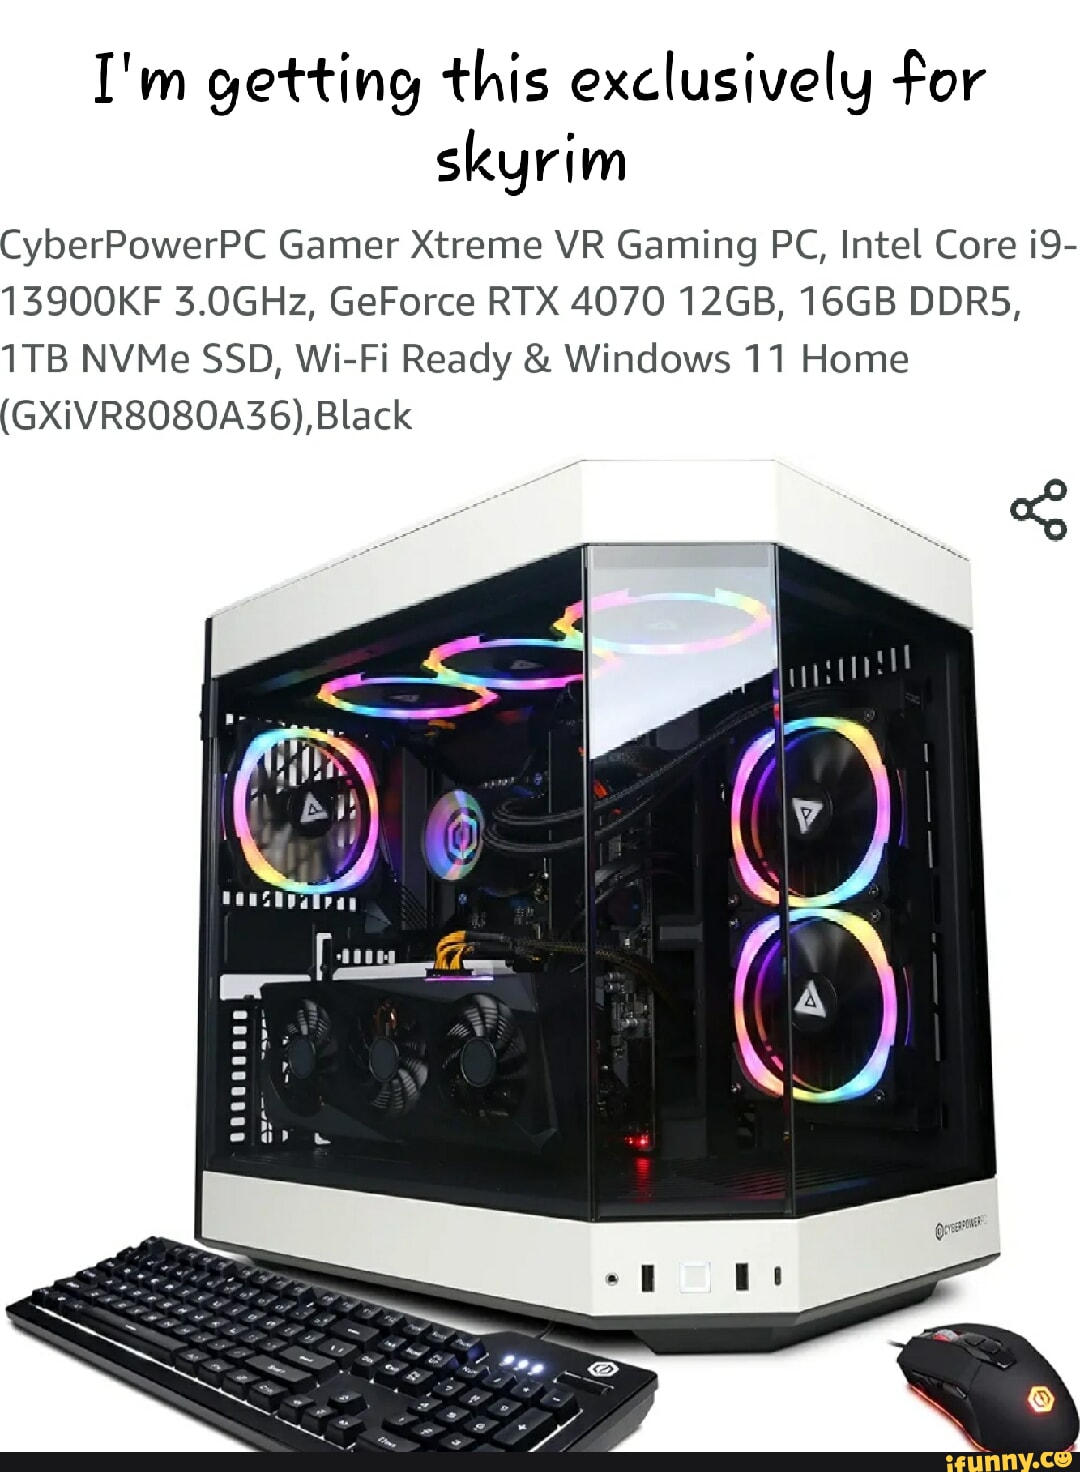  CyberpowerPC Gamer Xtreme VR Gaming PC, Intel Core i5